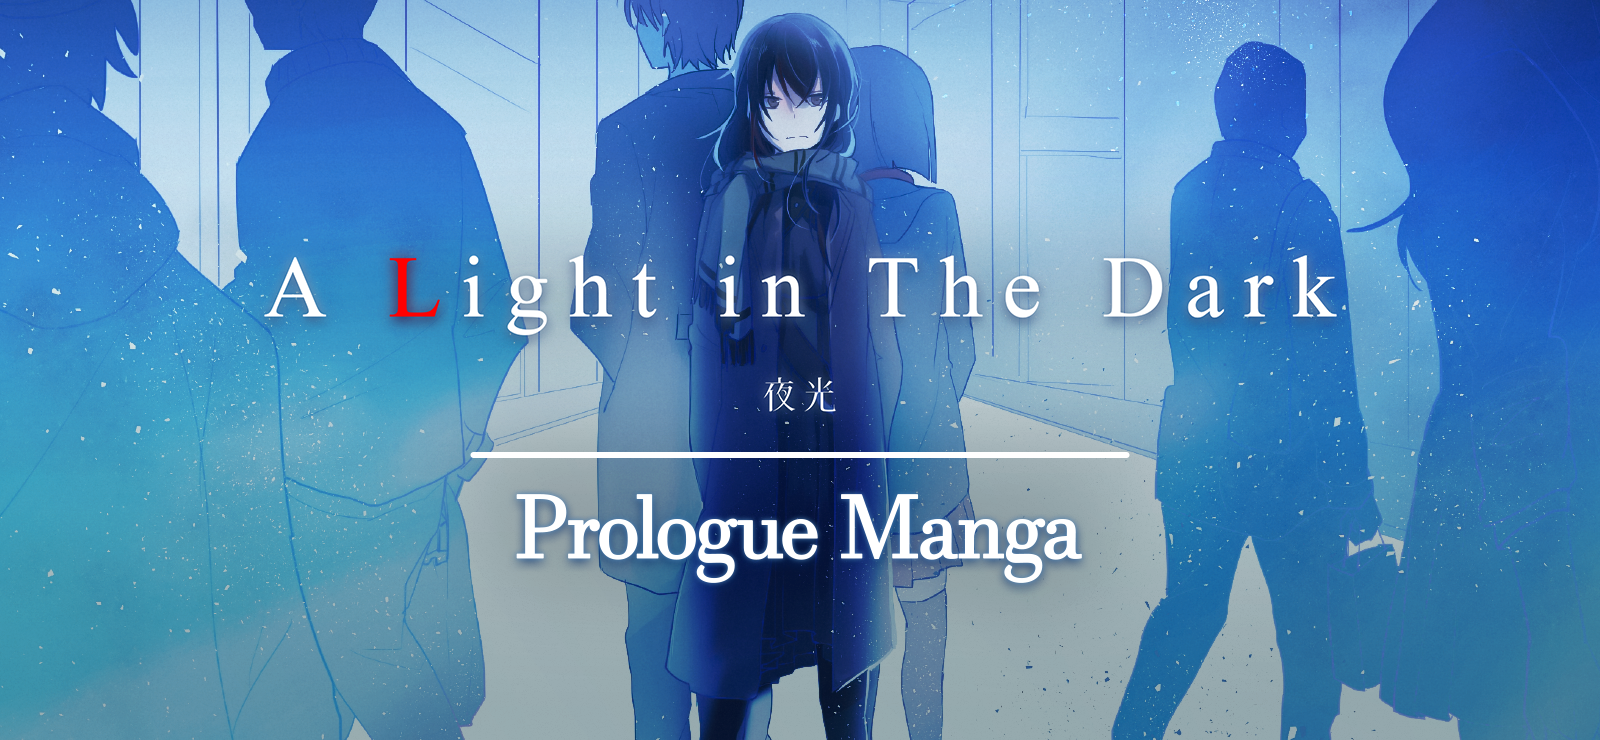 A Light In The Dark: Prologue Manga